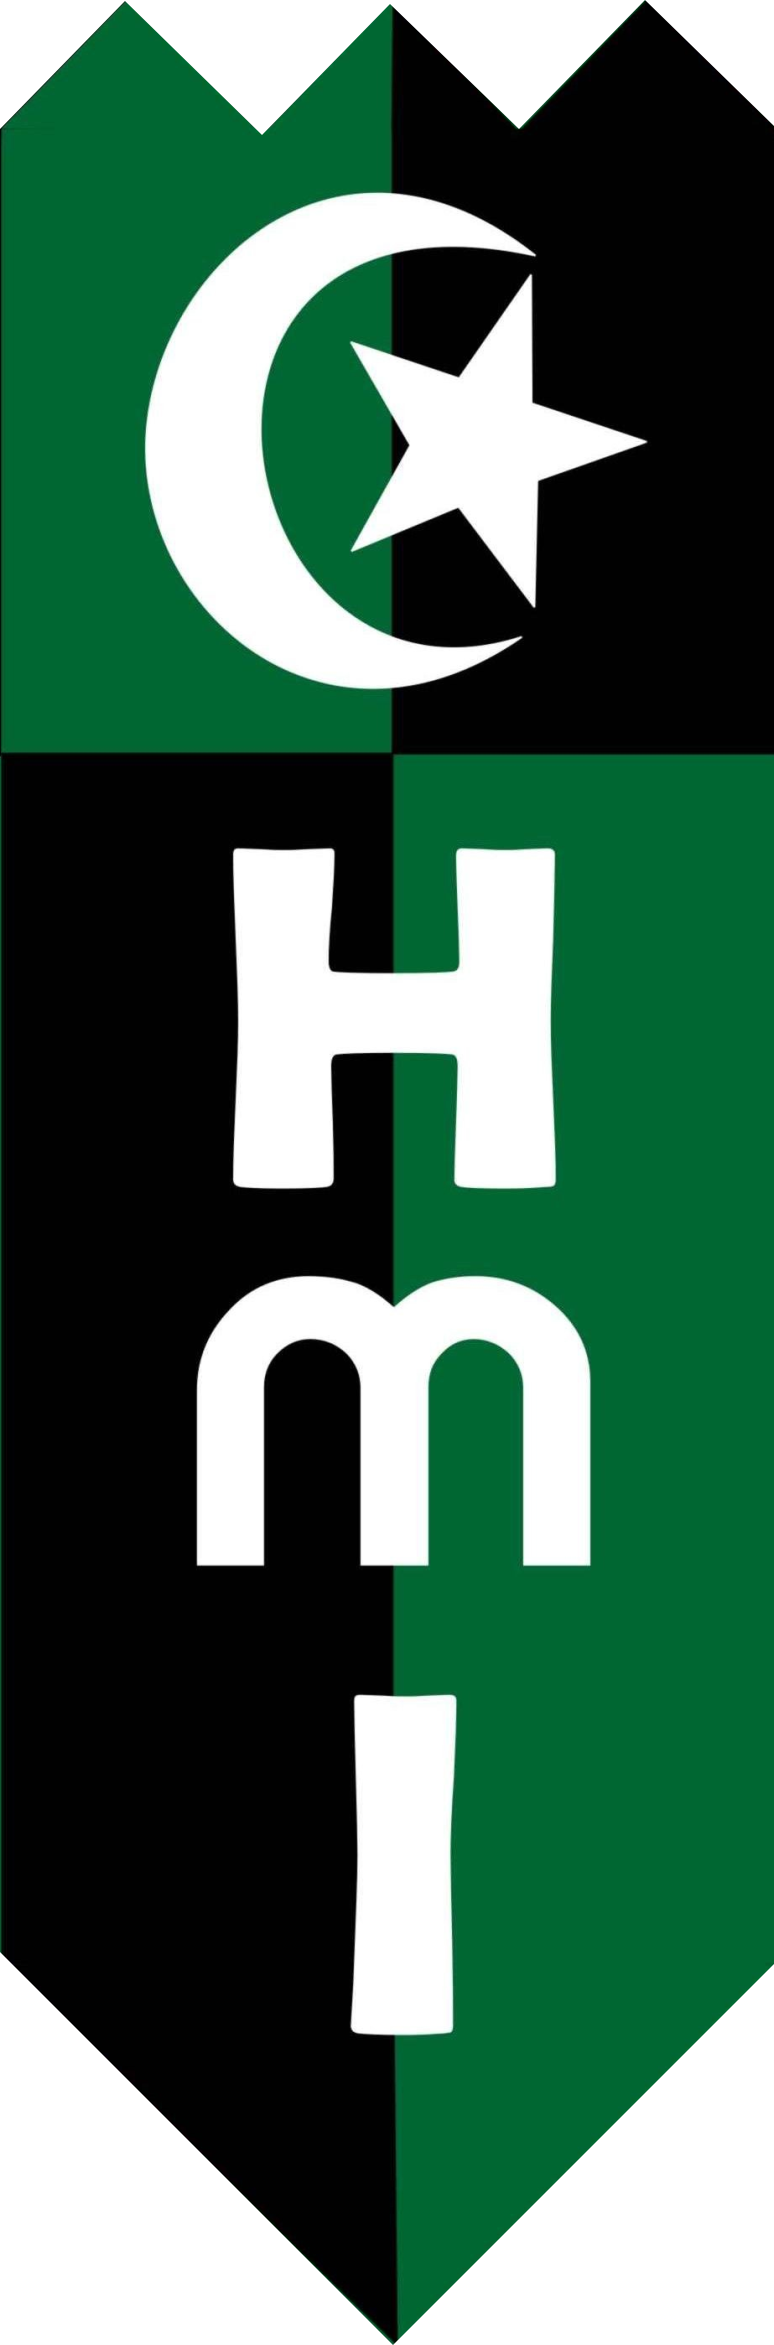 Logo HMI Filosofi HMI MPO FIAI UII